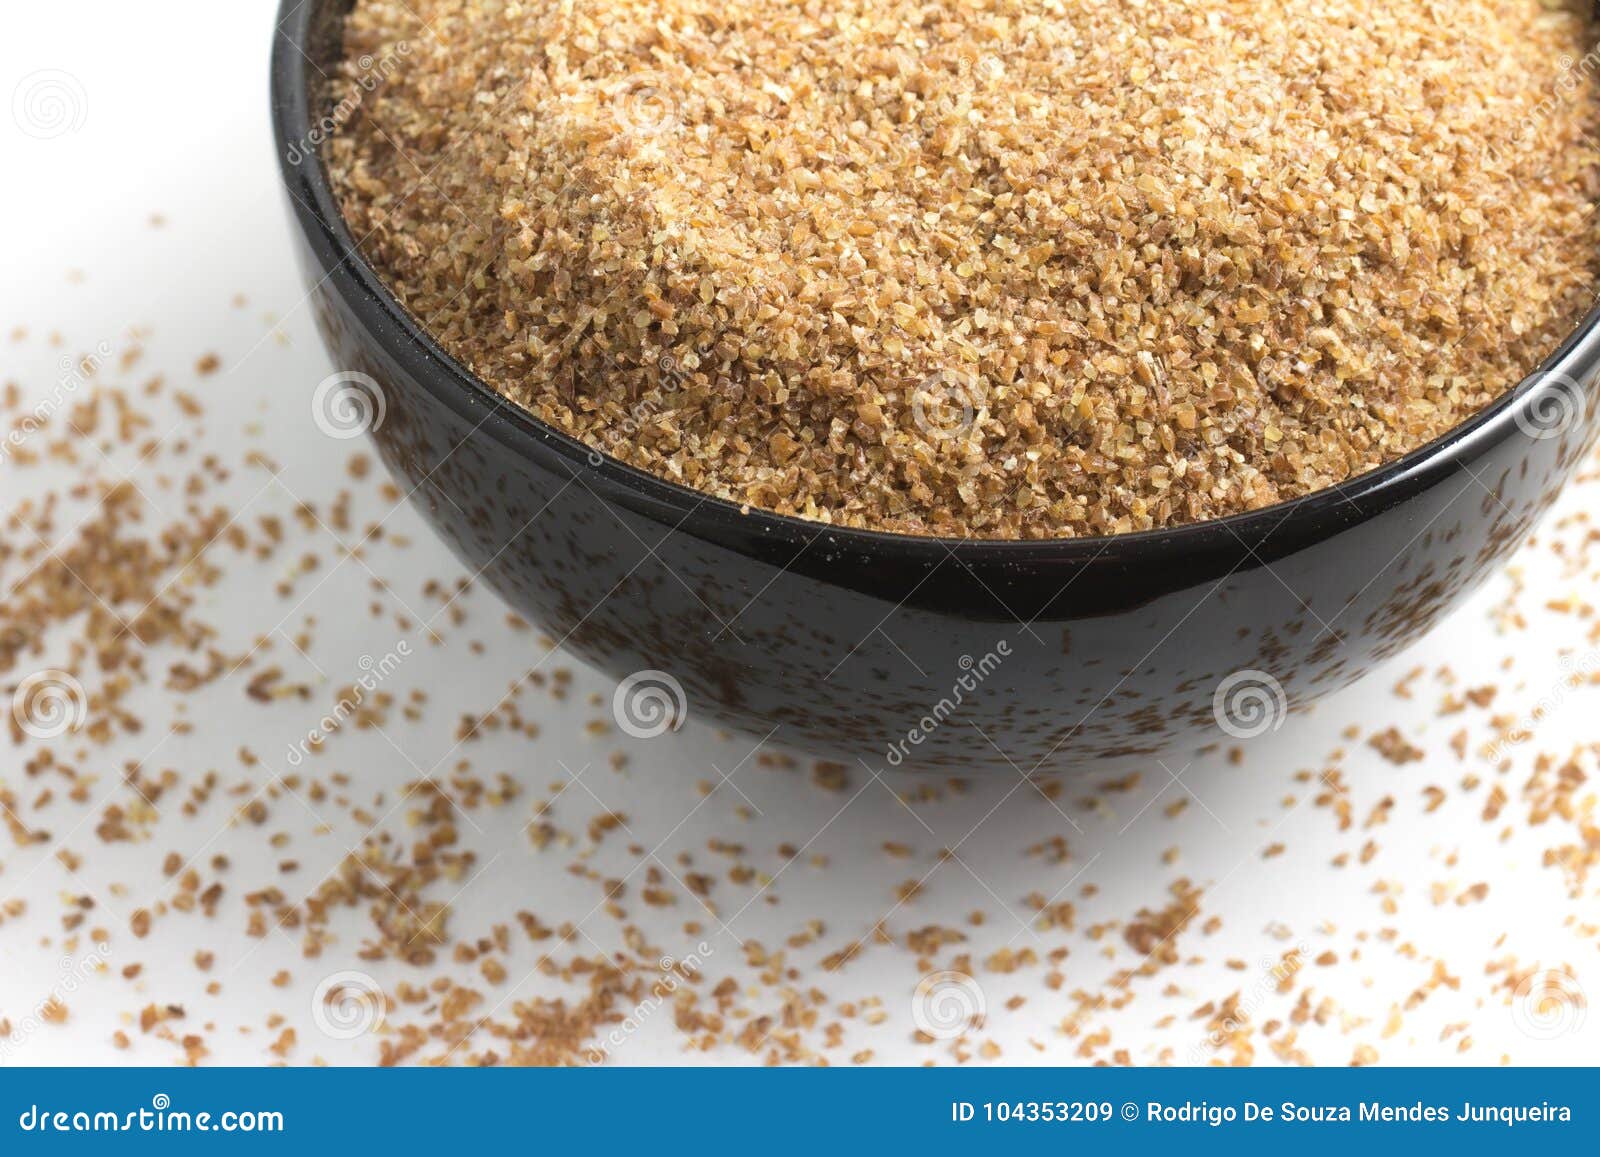 ground wheat for a kibbeh in a bowl / trigo para quibe.